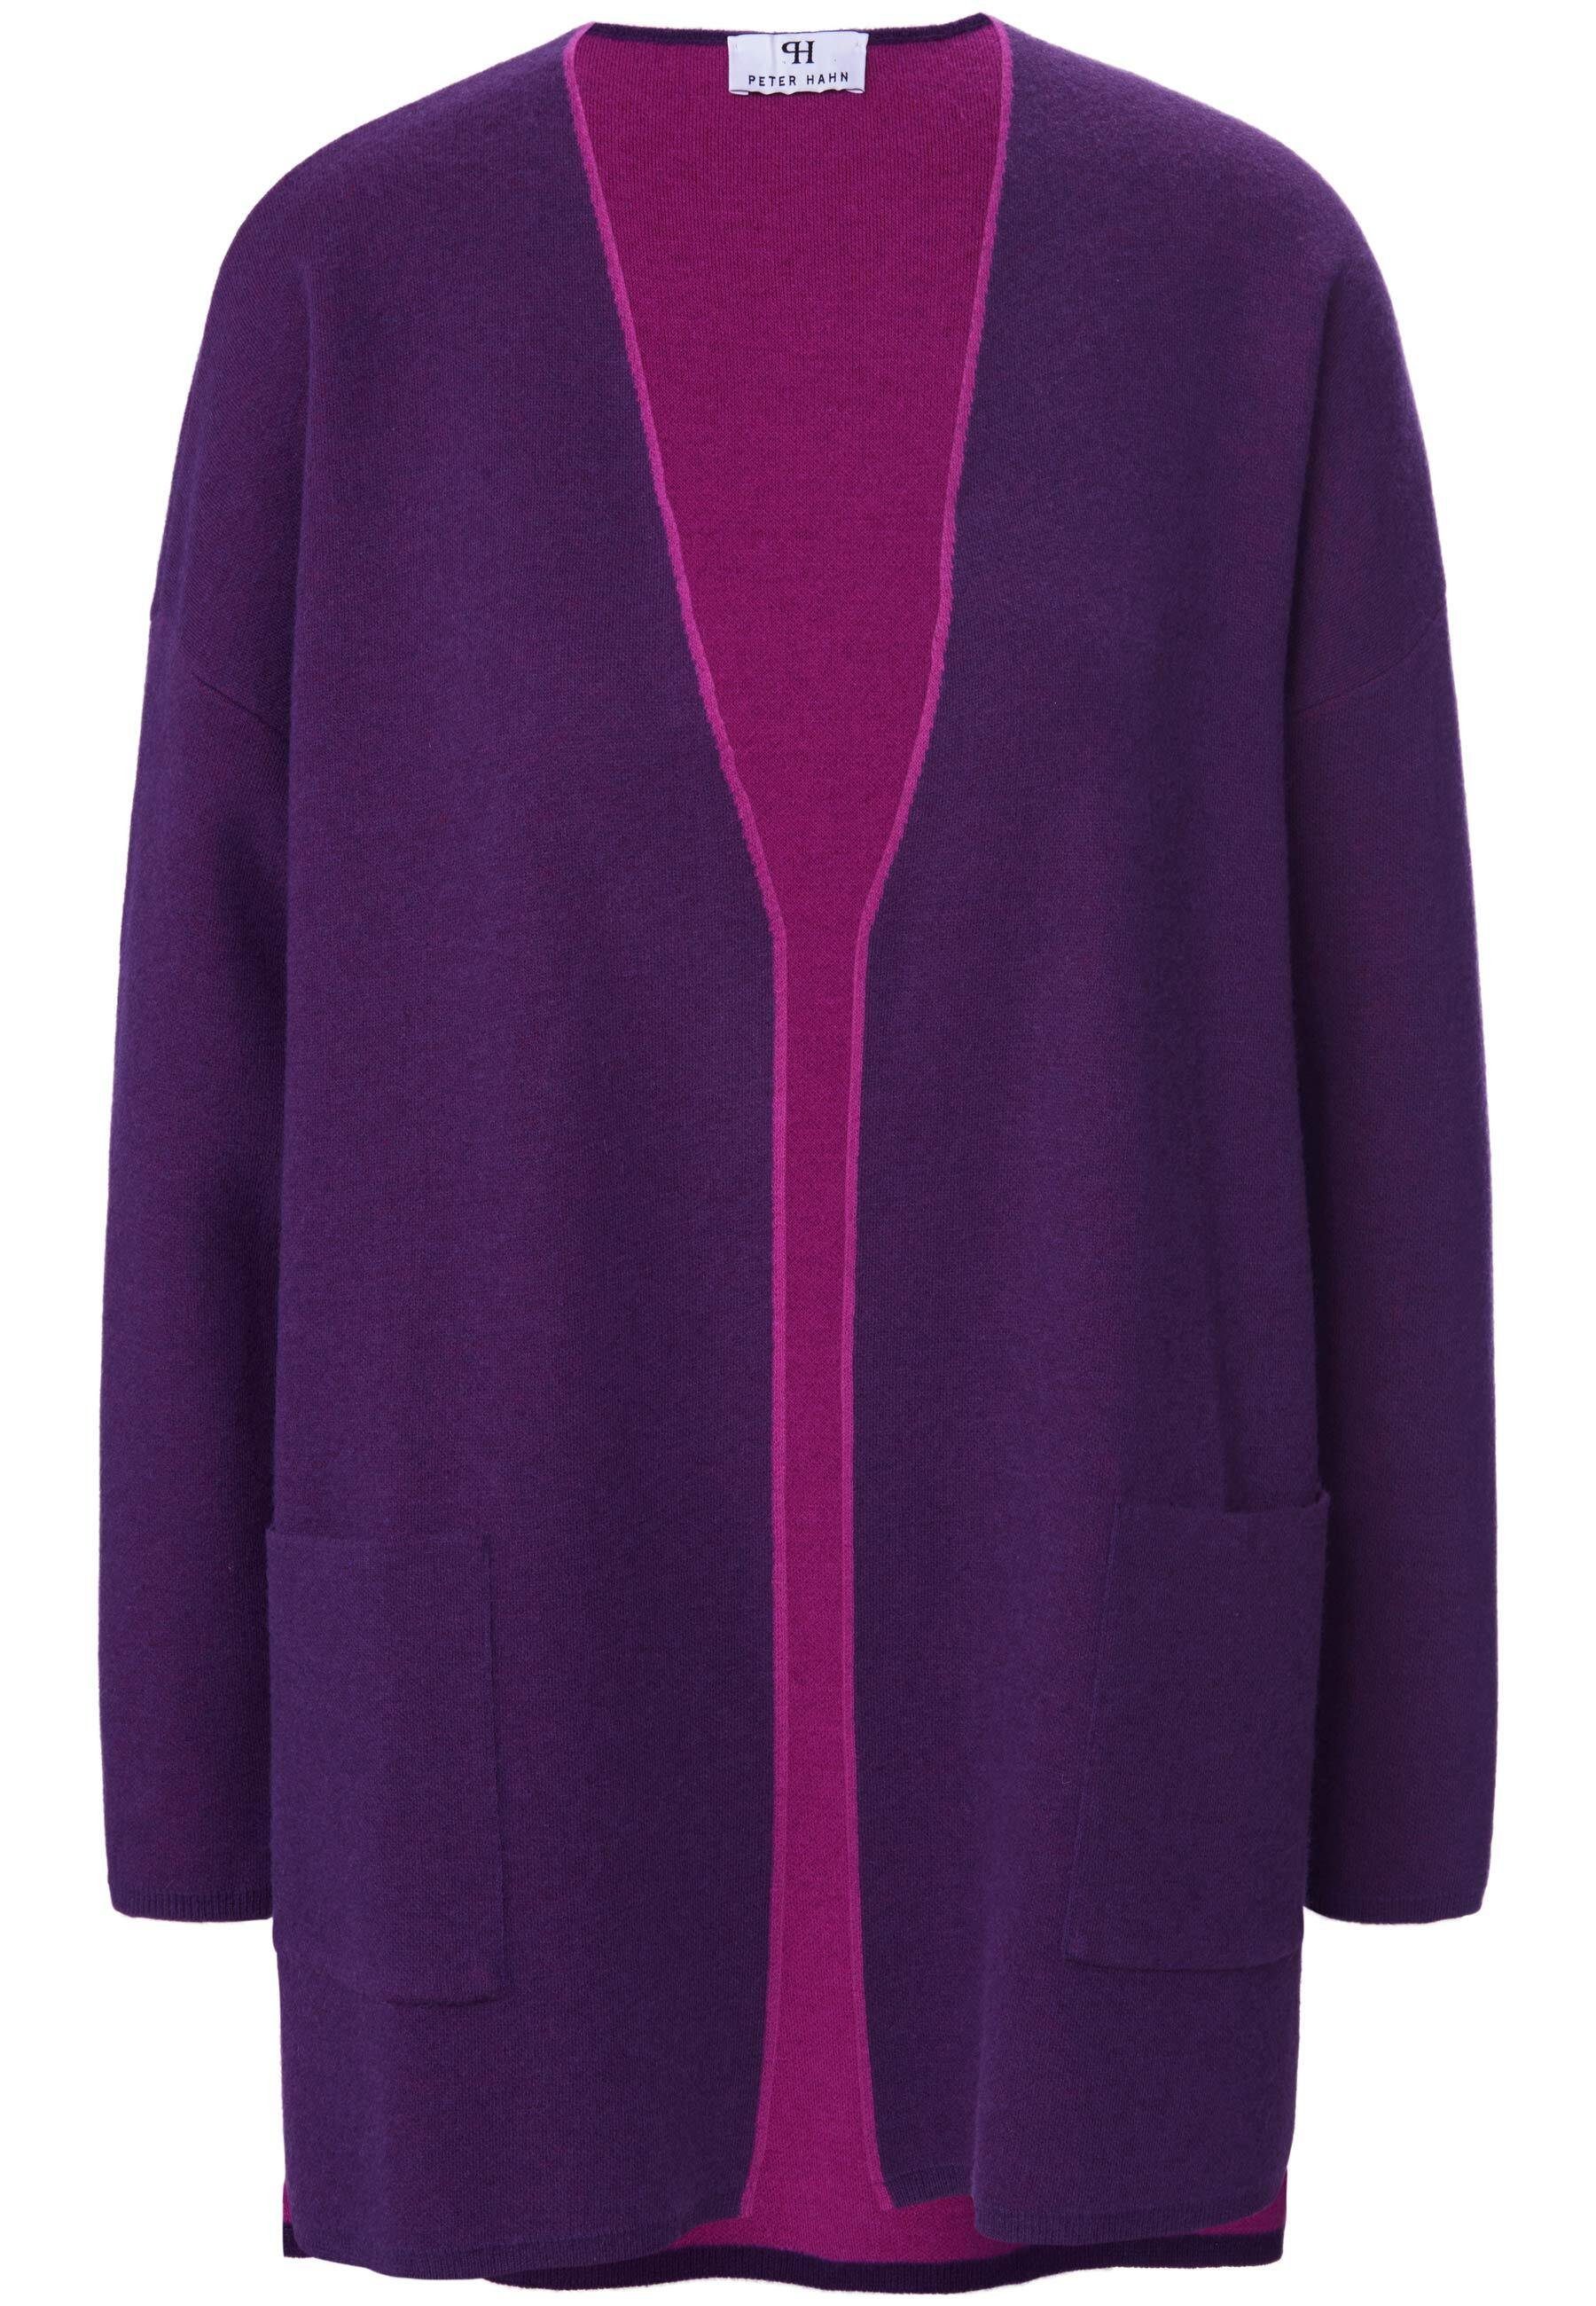 Hahn wool new Peter Cardigan dunkelviolett/pink